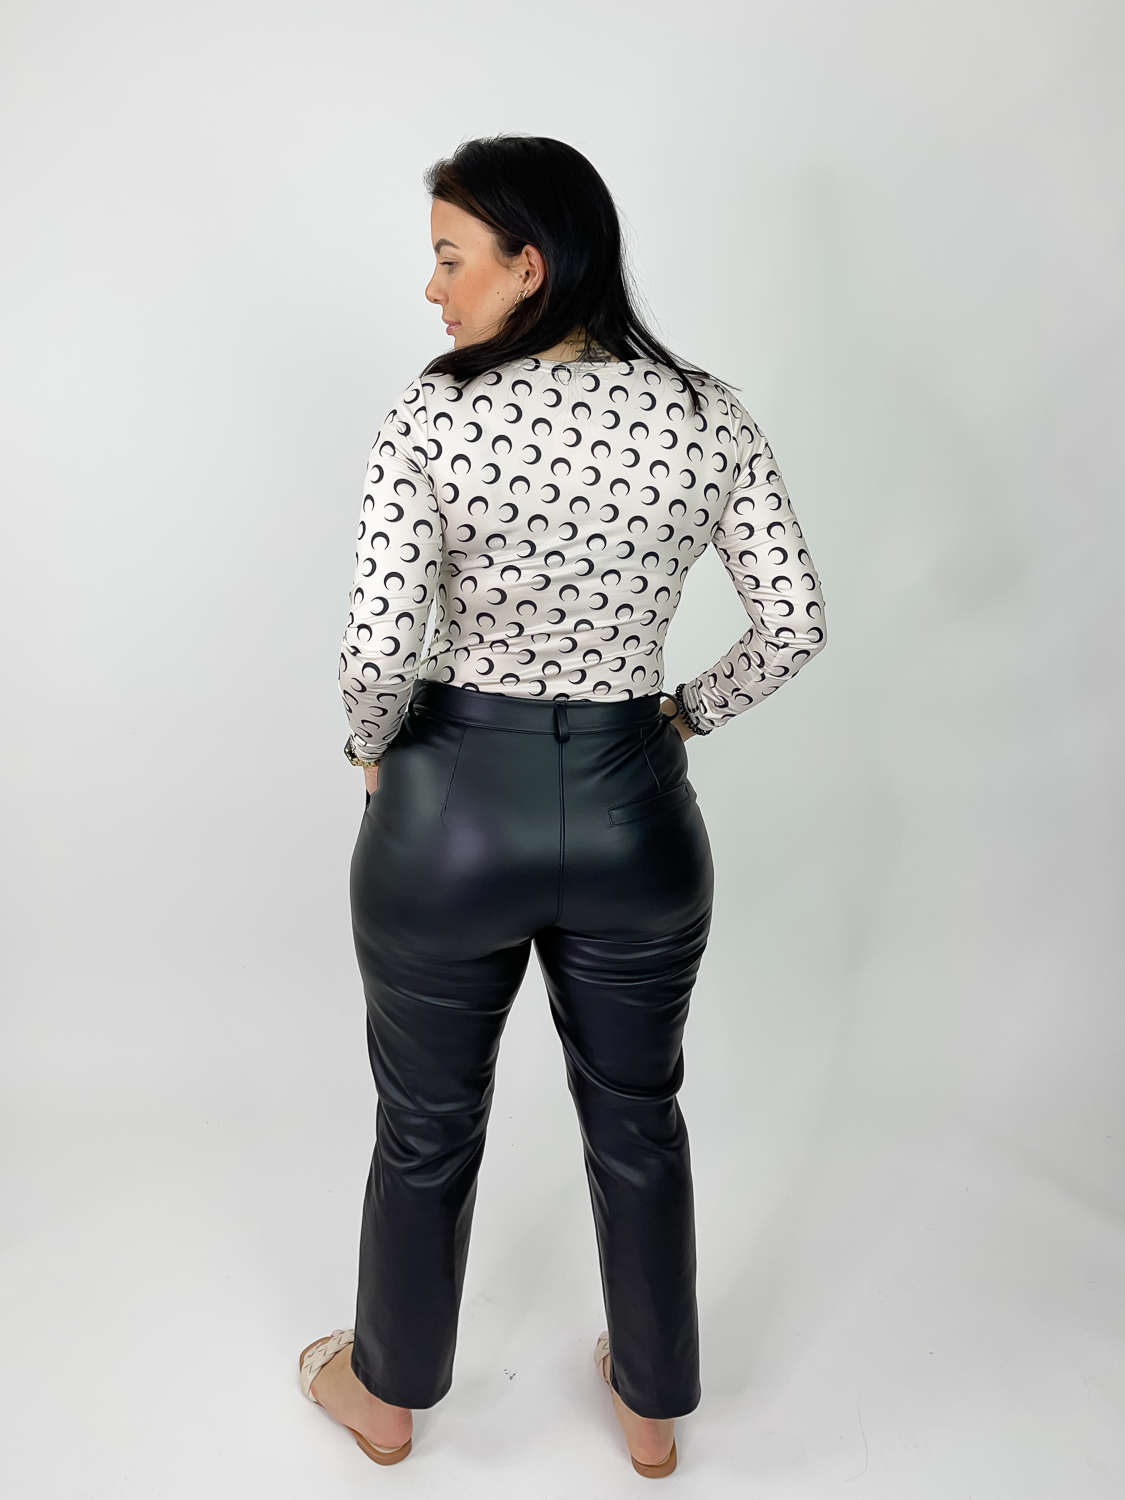 Langarmbody mit Mondprint in Offwhite, Miina Fashion Onlineshop